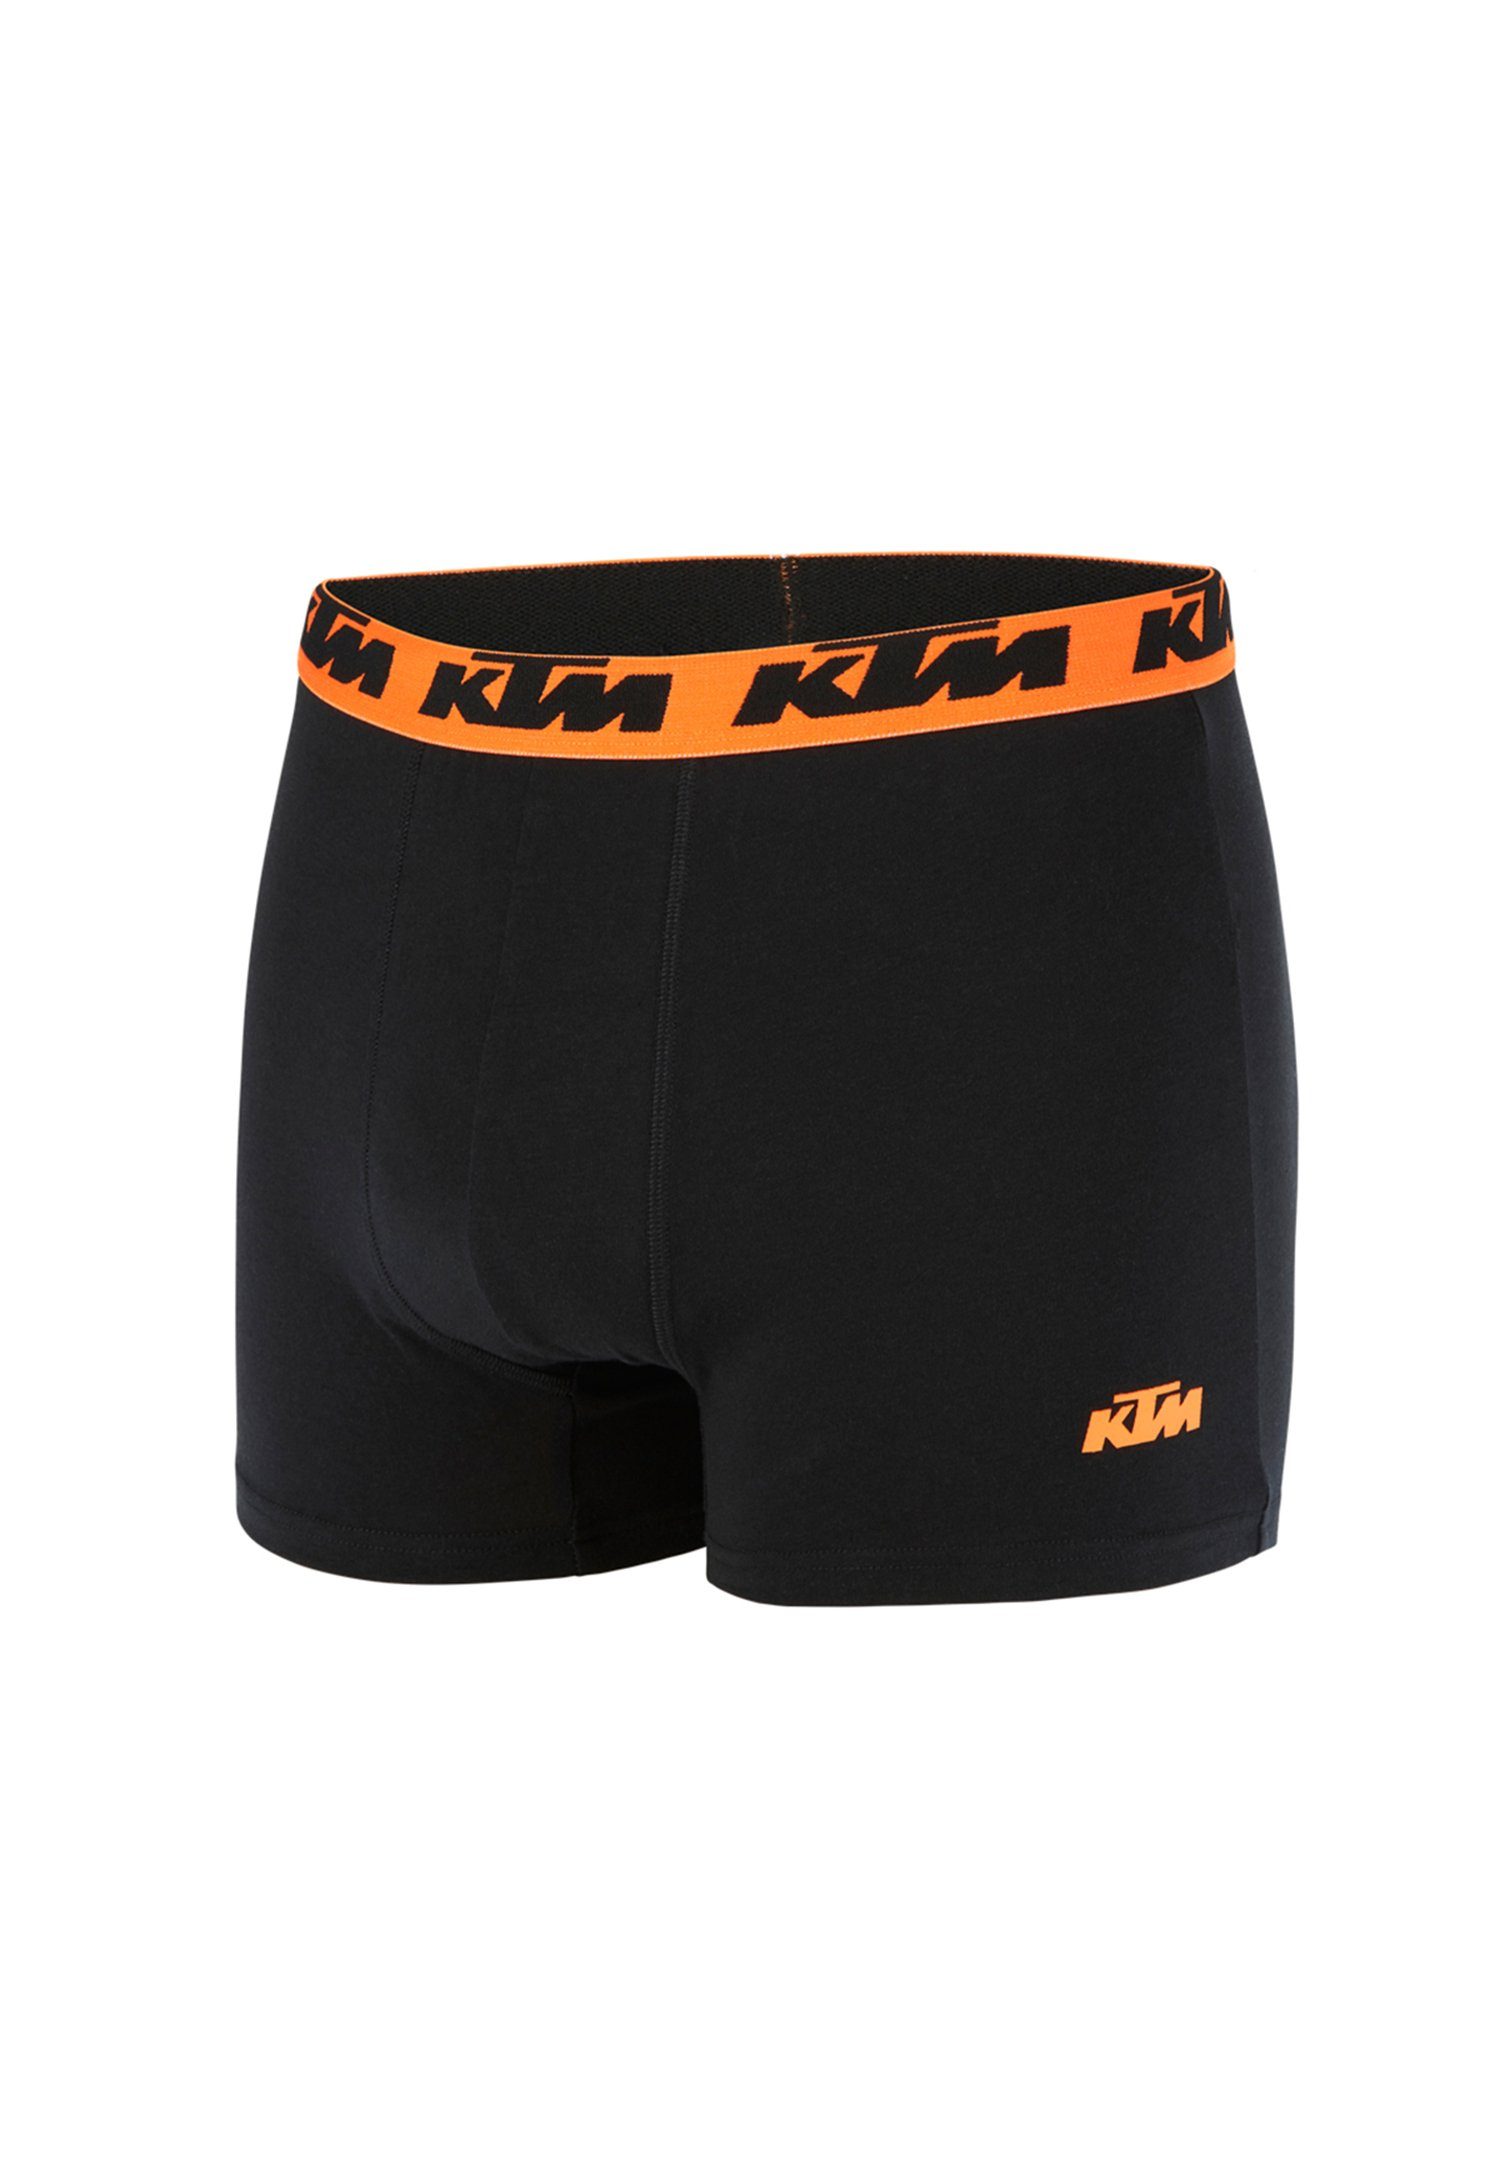 Man Pack Cotton Boxershorts X2 Black2 Grey / Dark (2-St) Boxer KTM